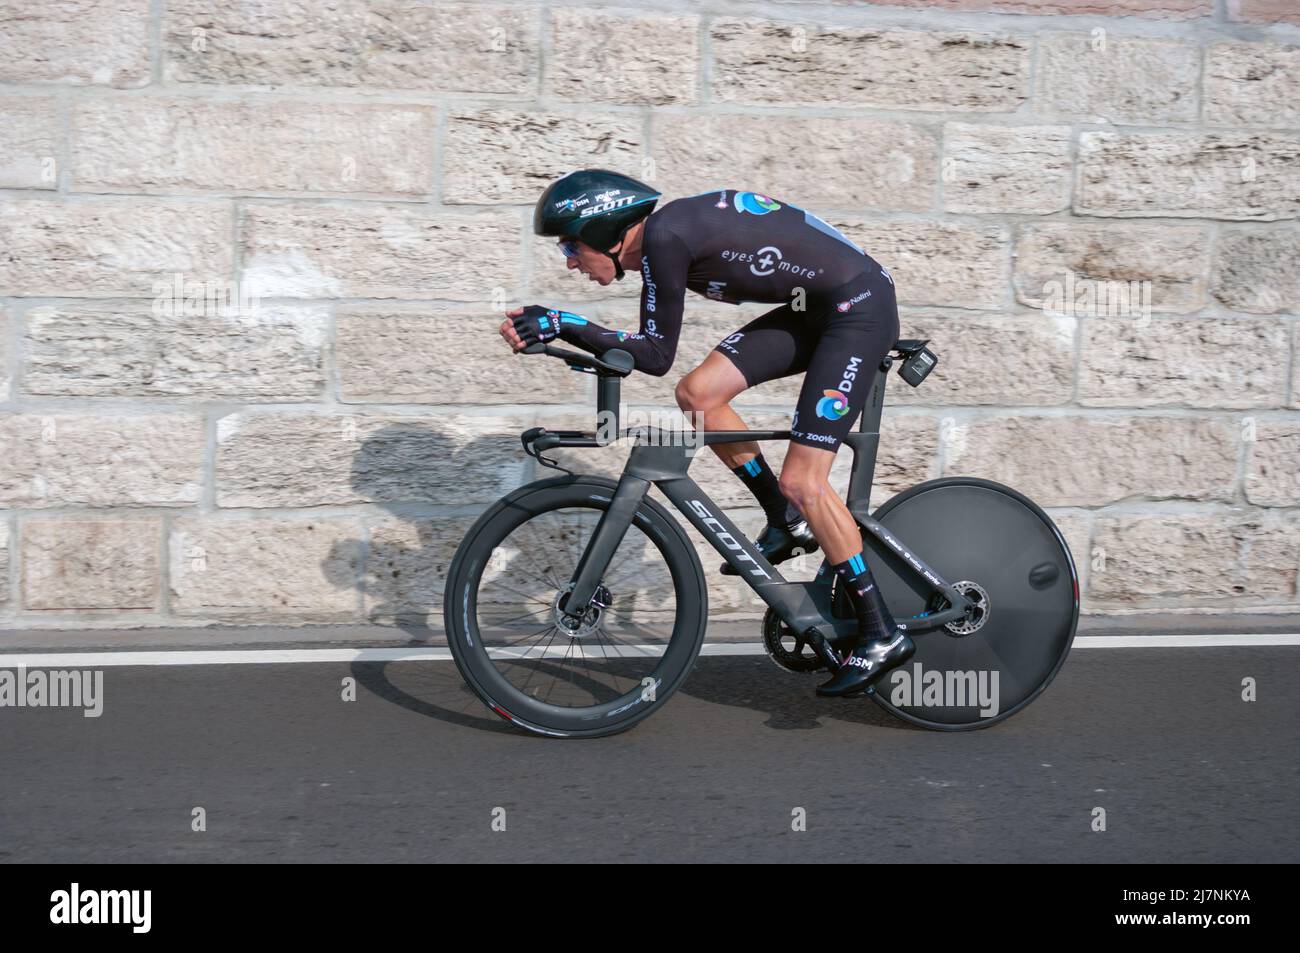 BUDAPEST, UNGARN - MAI 0- 7, 2022: Profi-Radfahrer Romain Bardet TEAM DSM Giro D'Italia Etappe 2 Zeitfahren - Radrennen am 07. Mai 2022 in B Stockfoto